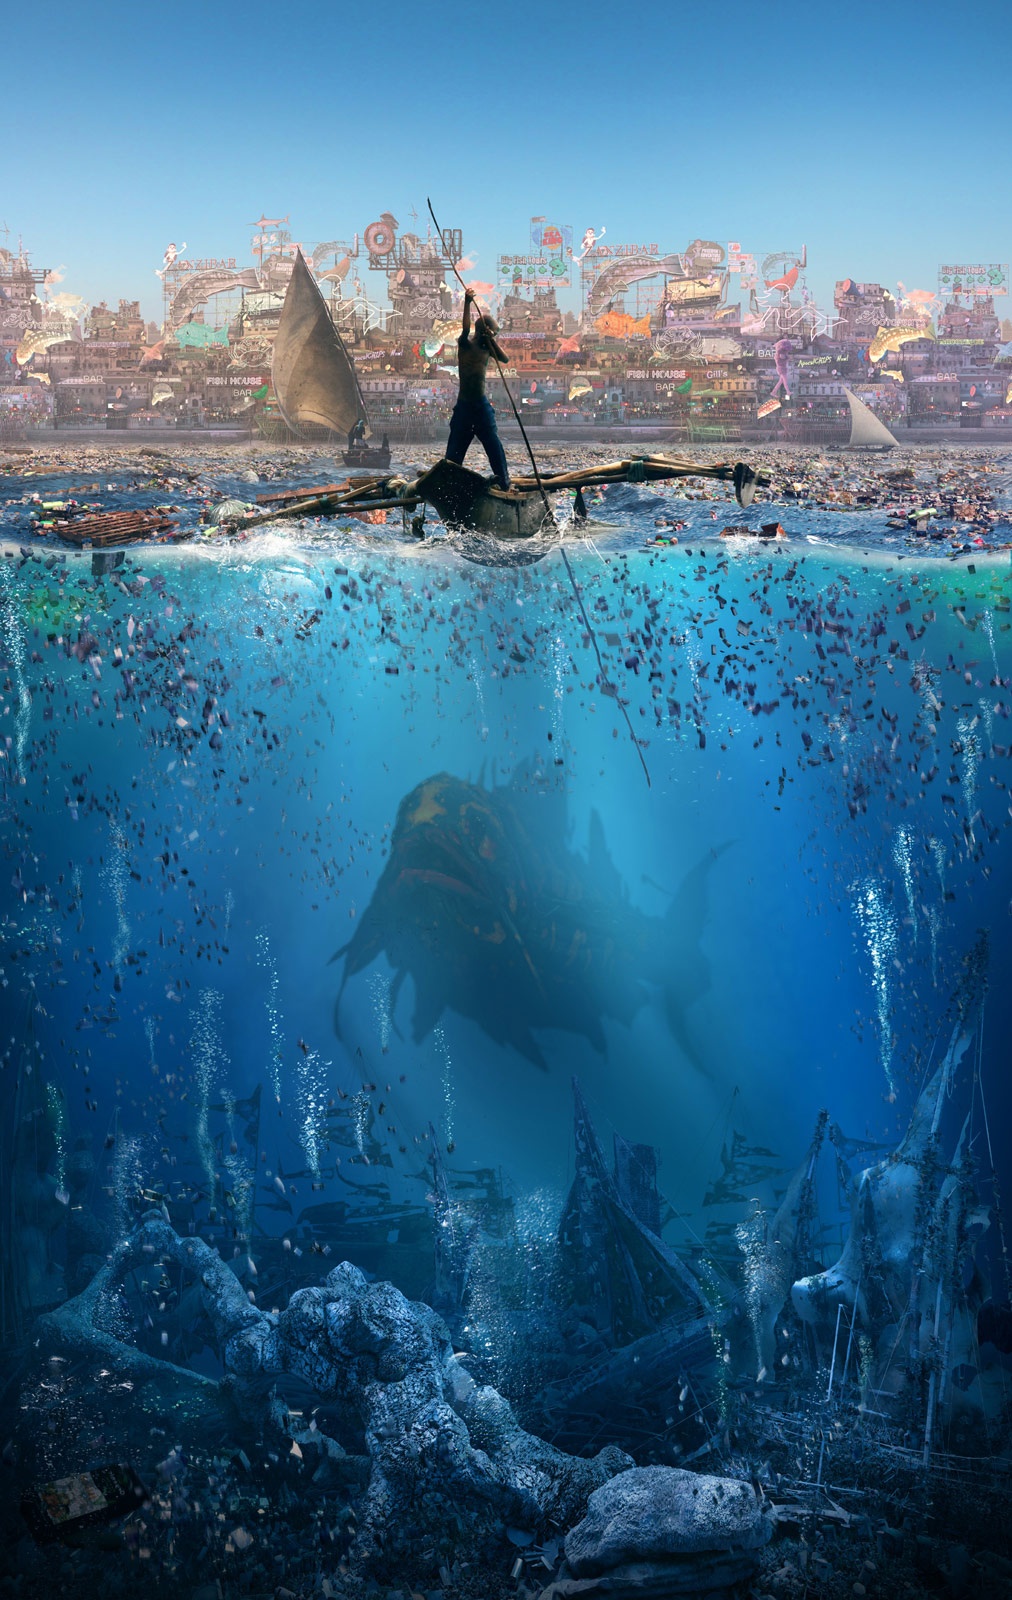 Jonah - Poster by Paul Nicholls